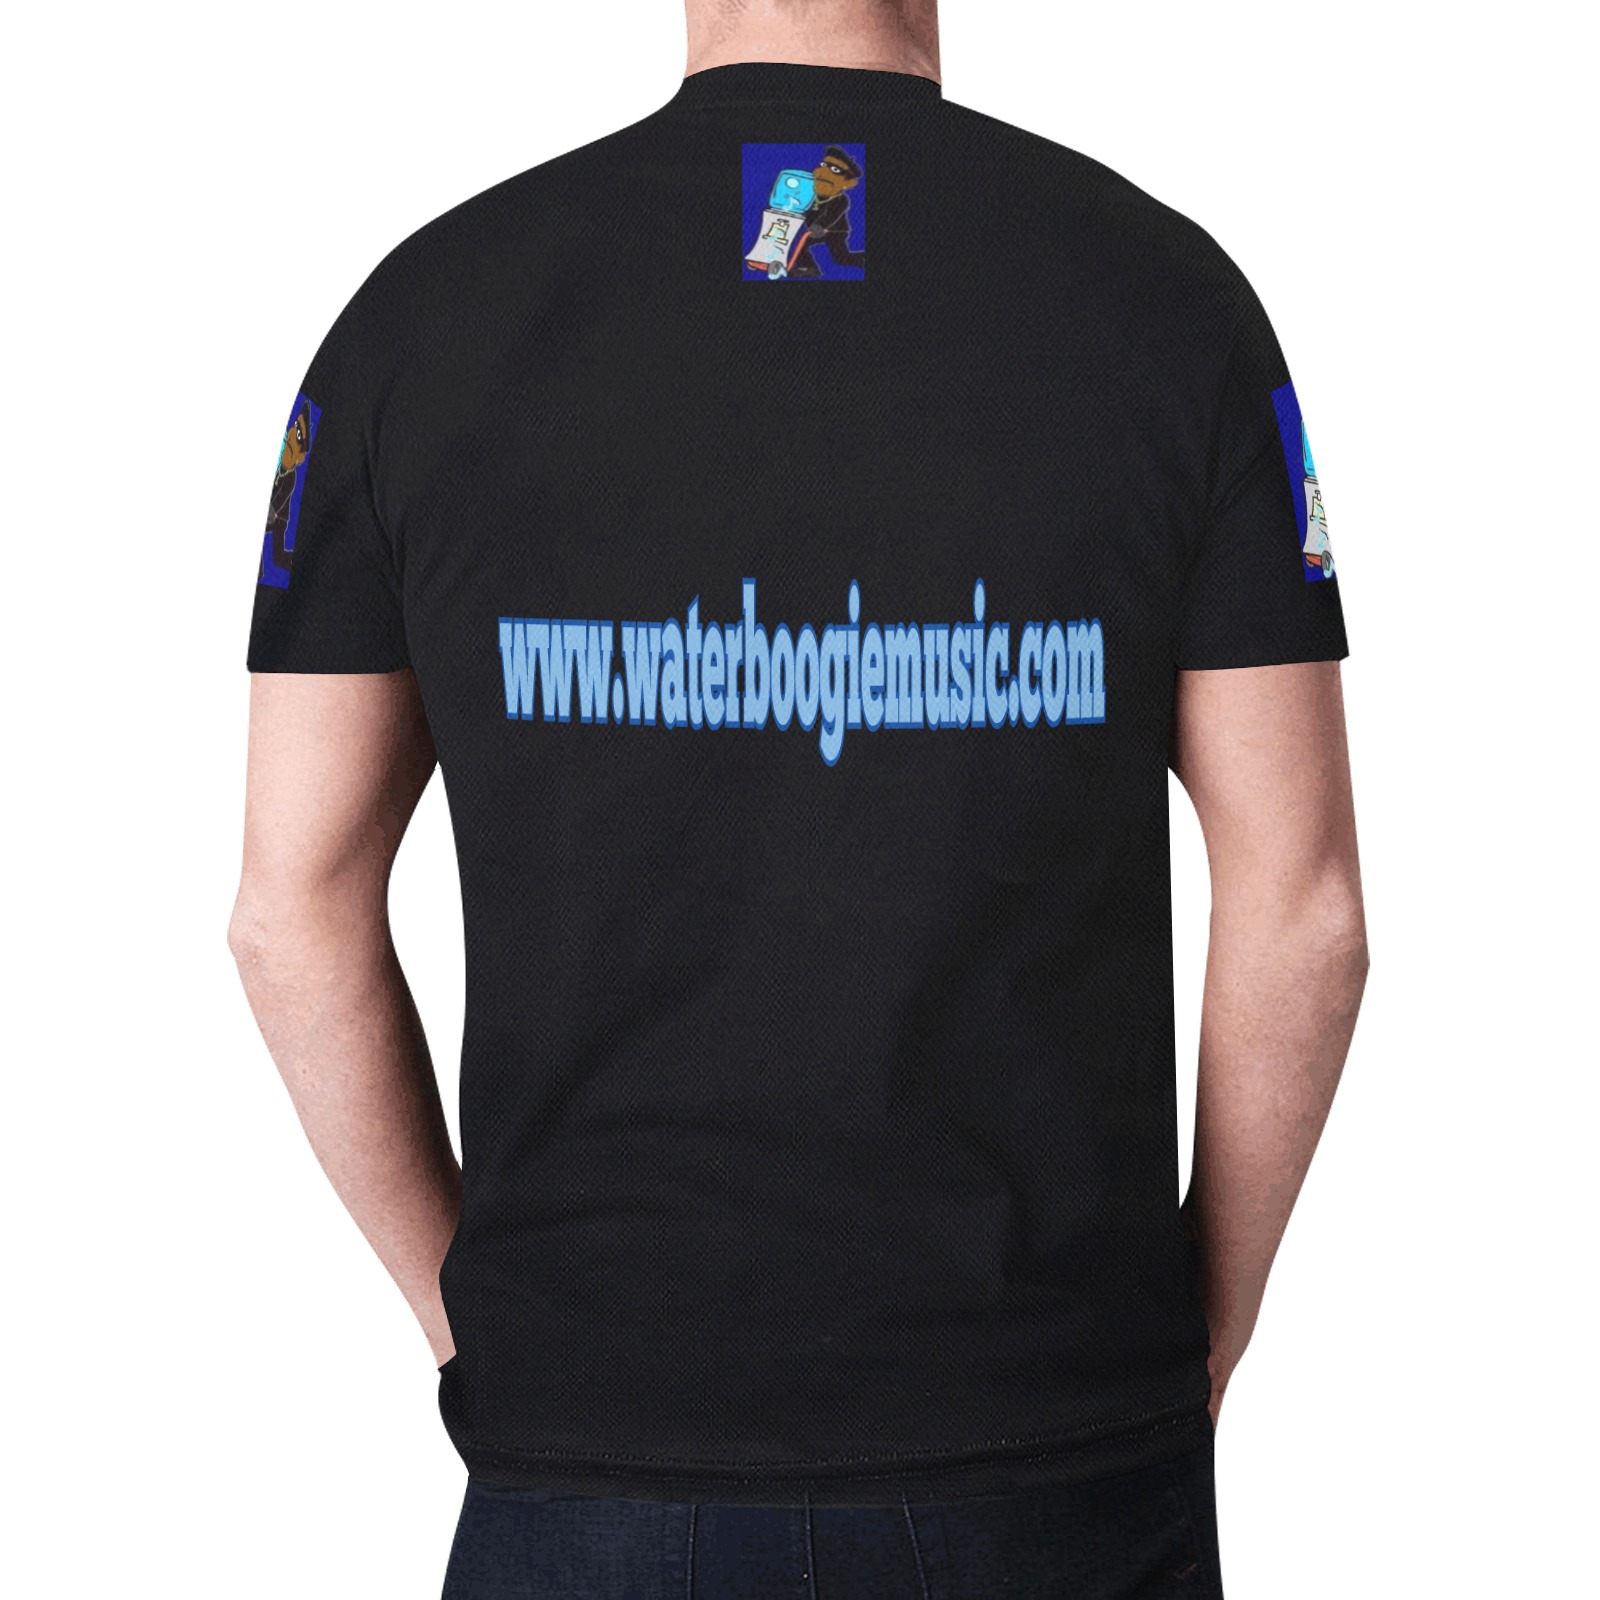 Waterboogie Music -  Black T-shirt New All Over Print T-shirt for Men (Model T45)